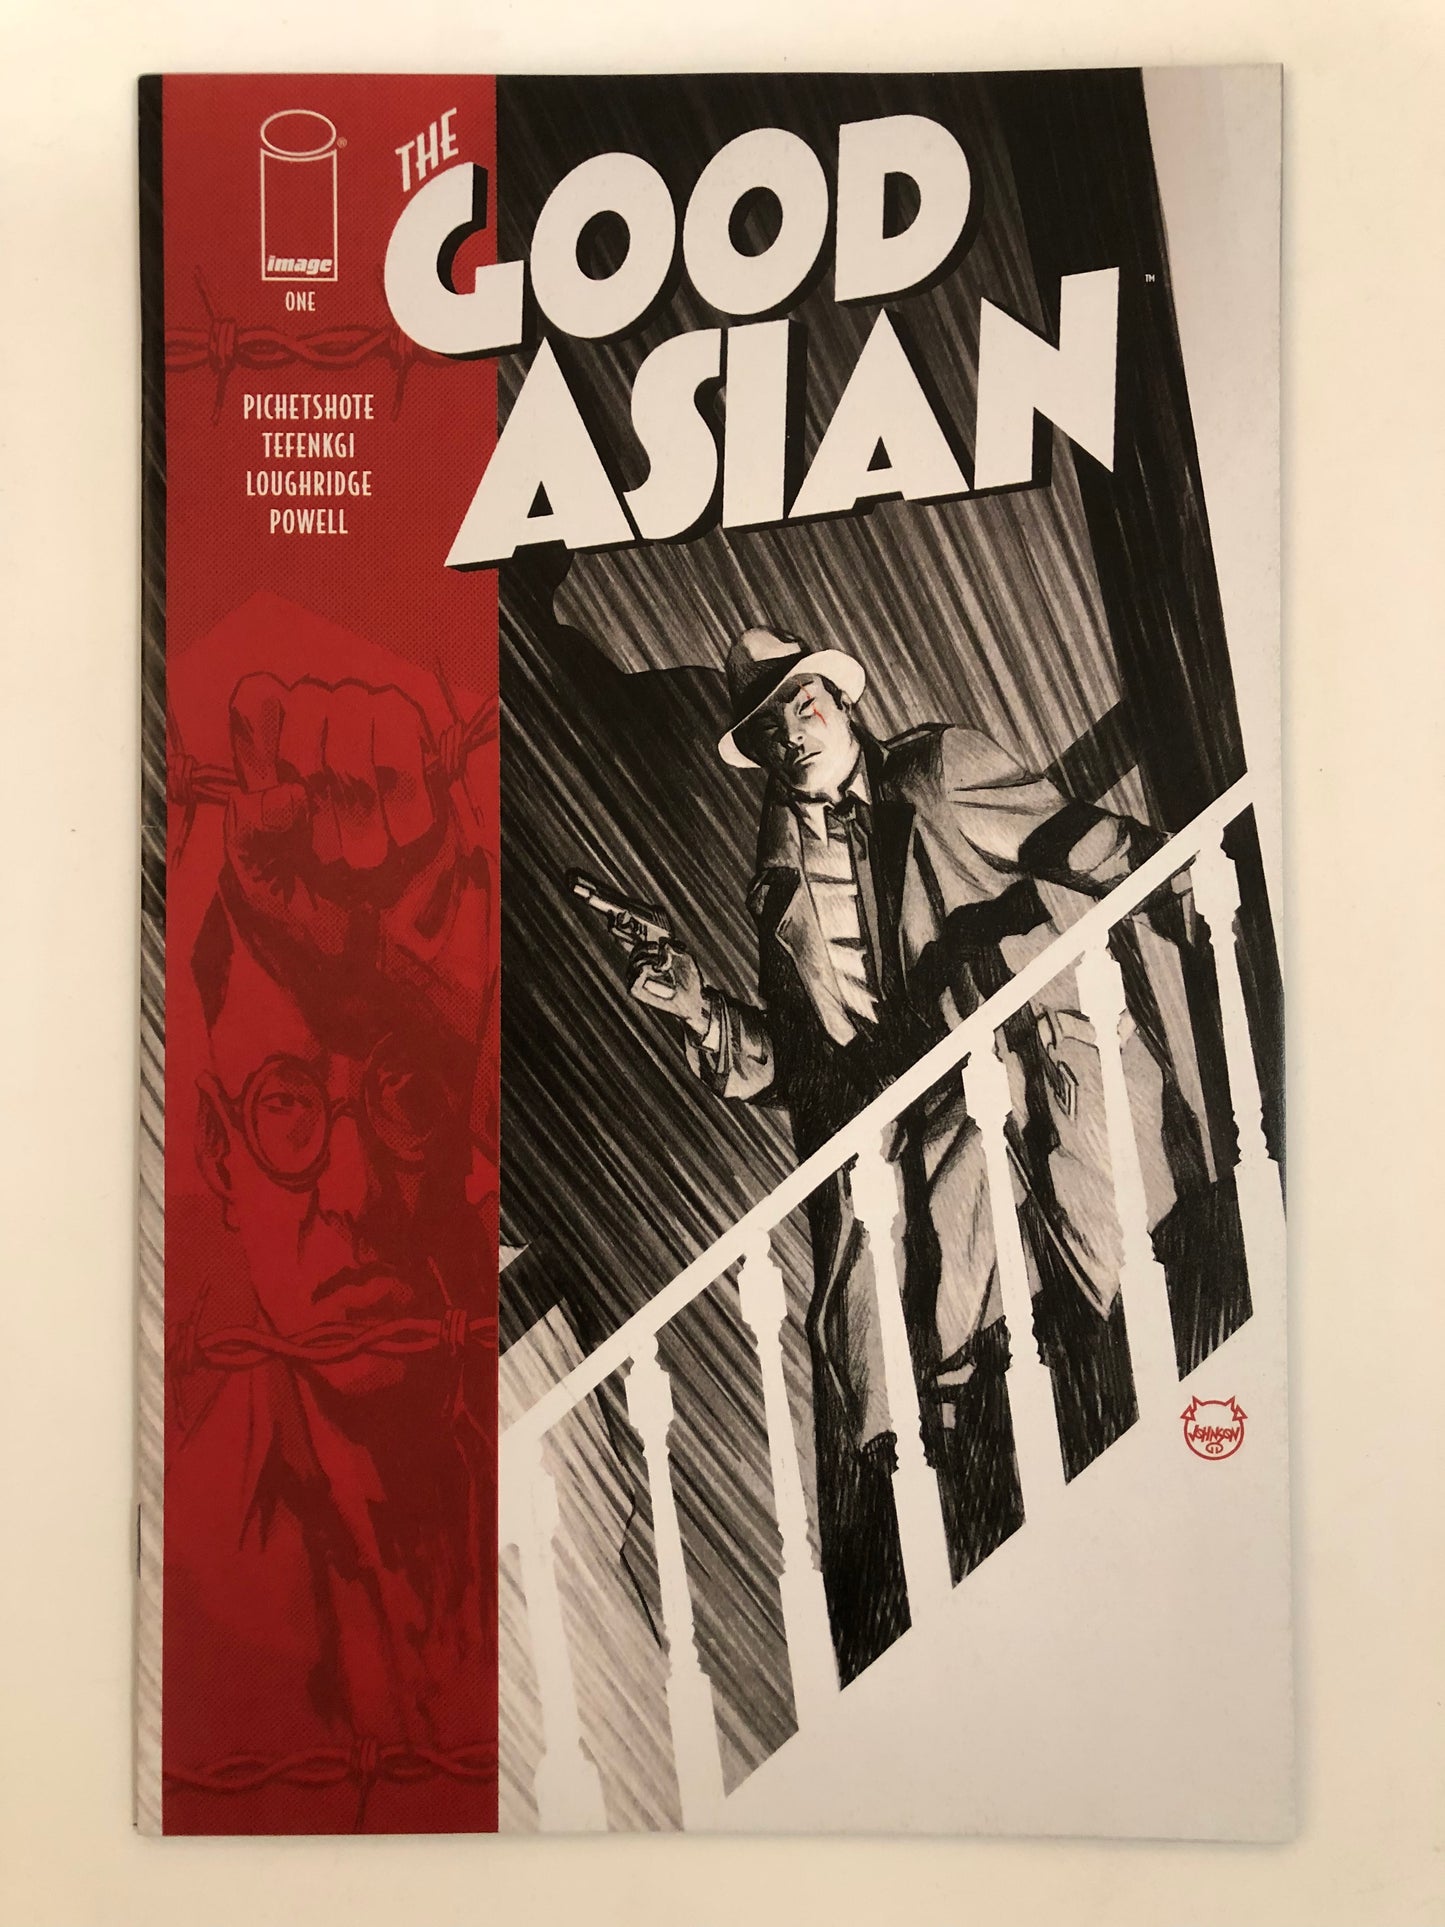 The Good Asian #1